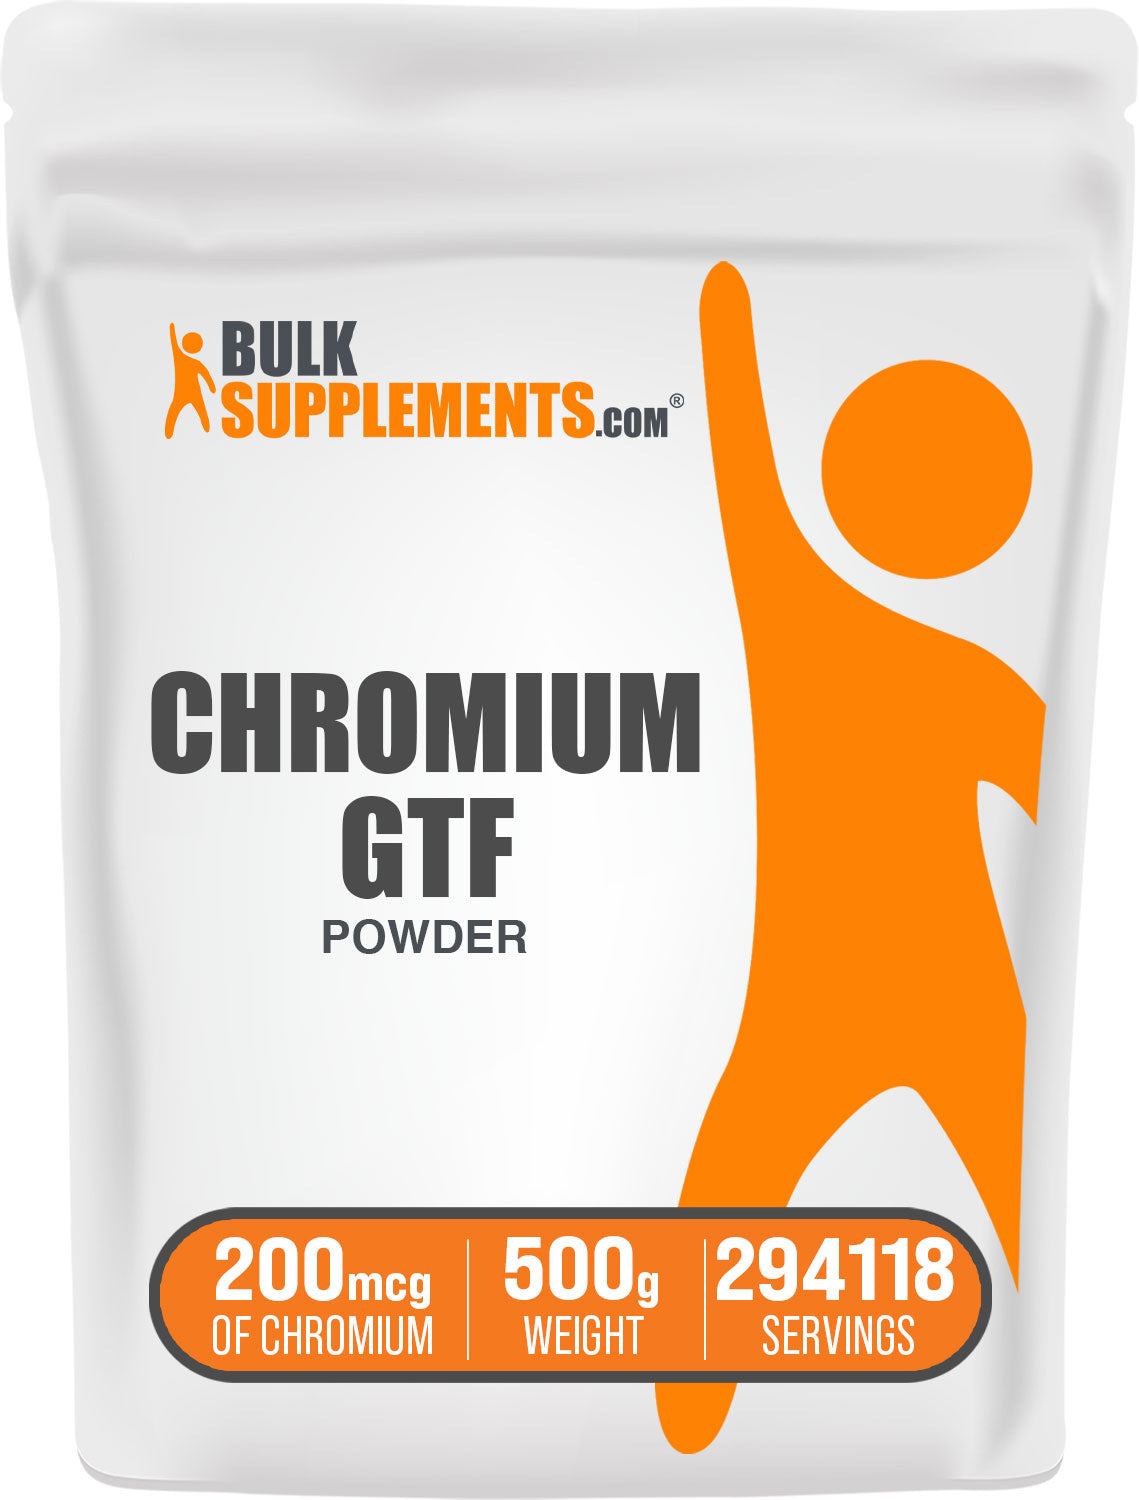 BulkSupplements.com Chromium GTF powder 500g bag